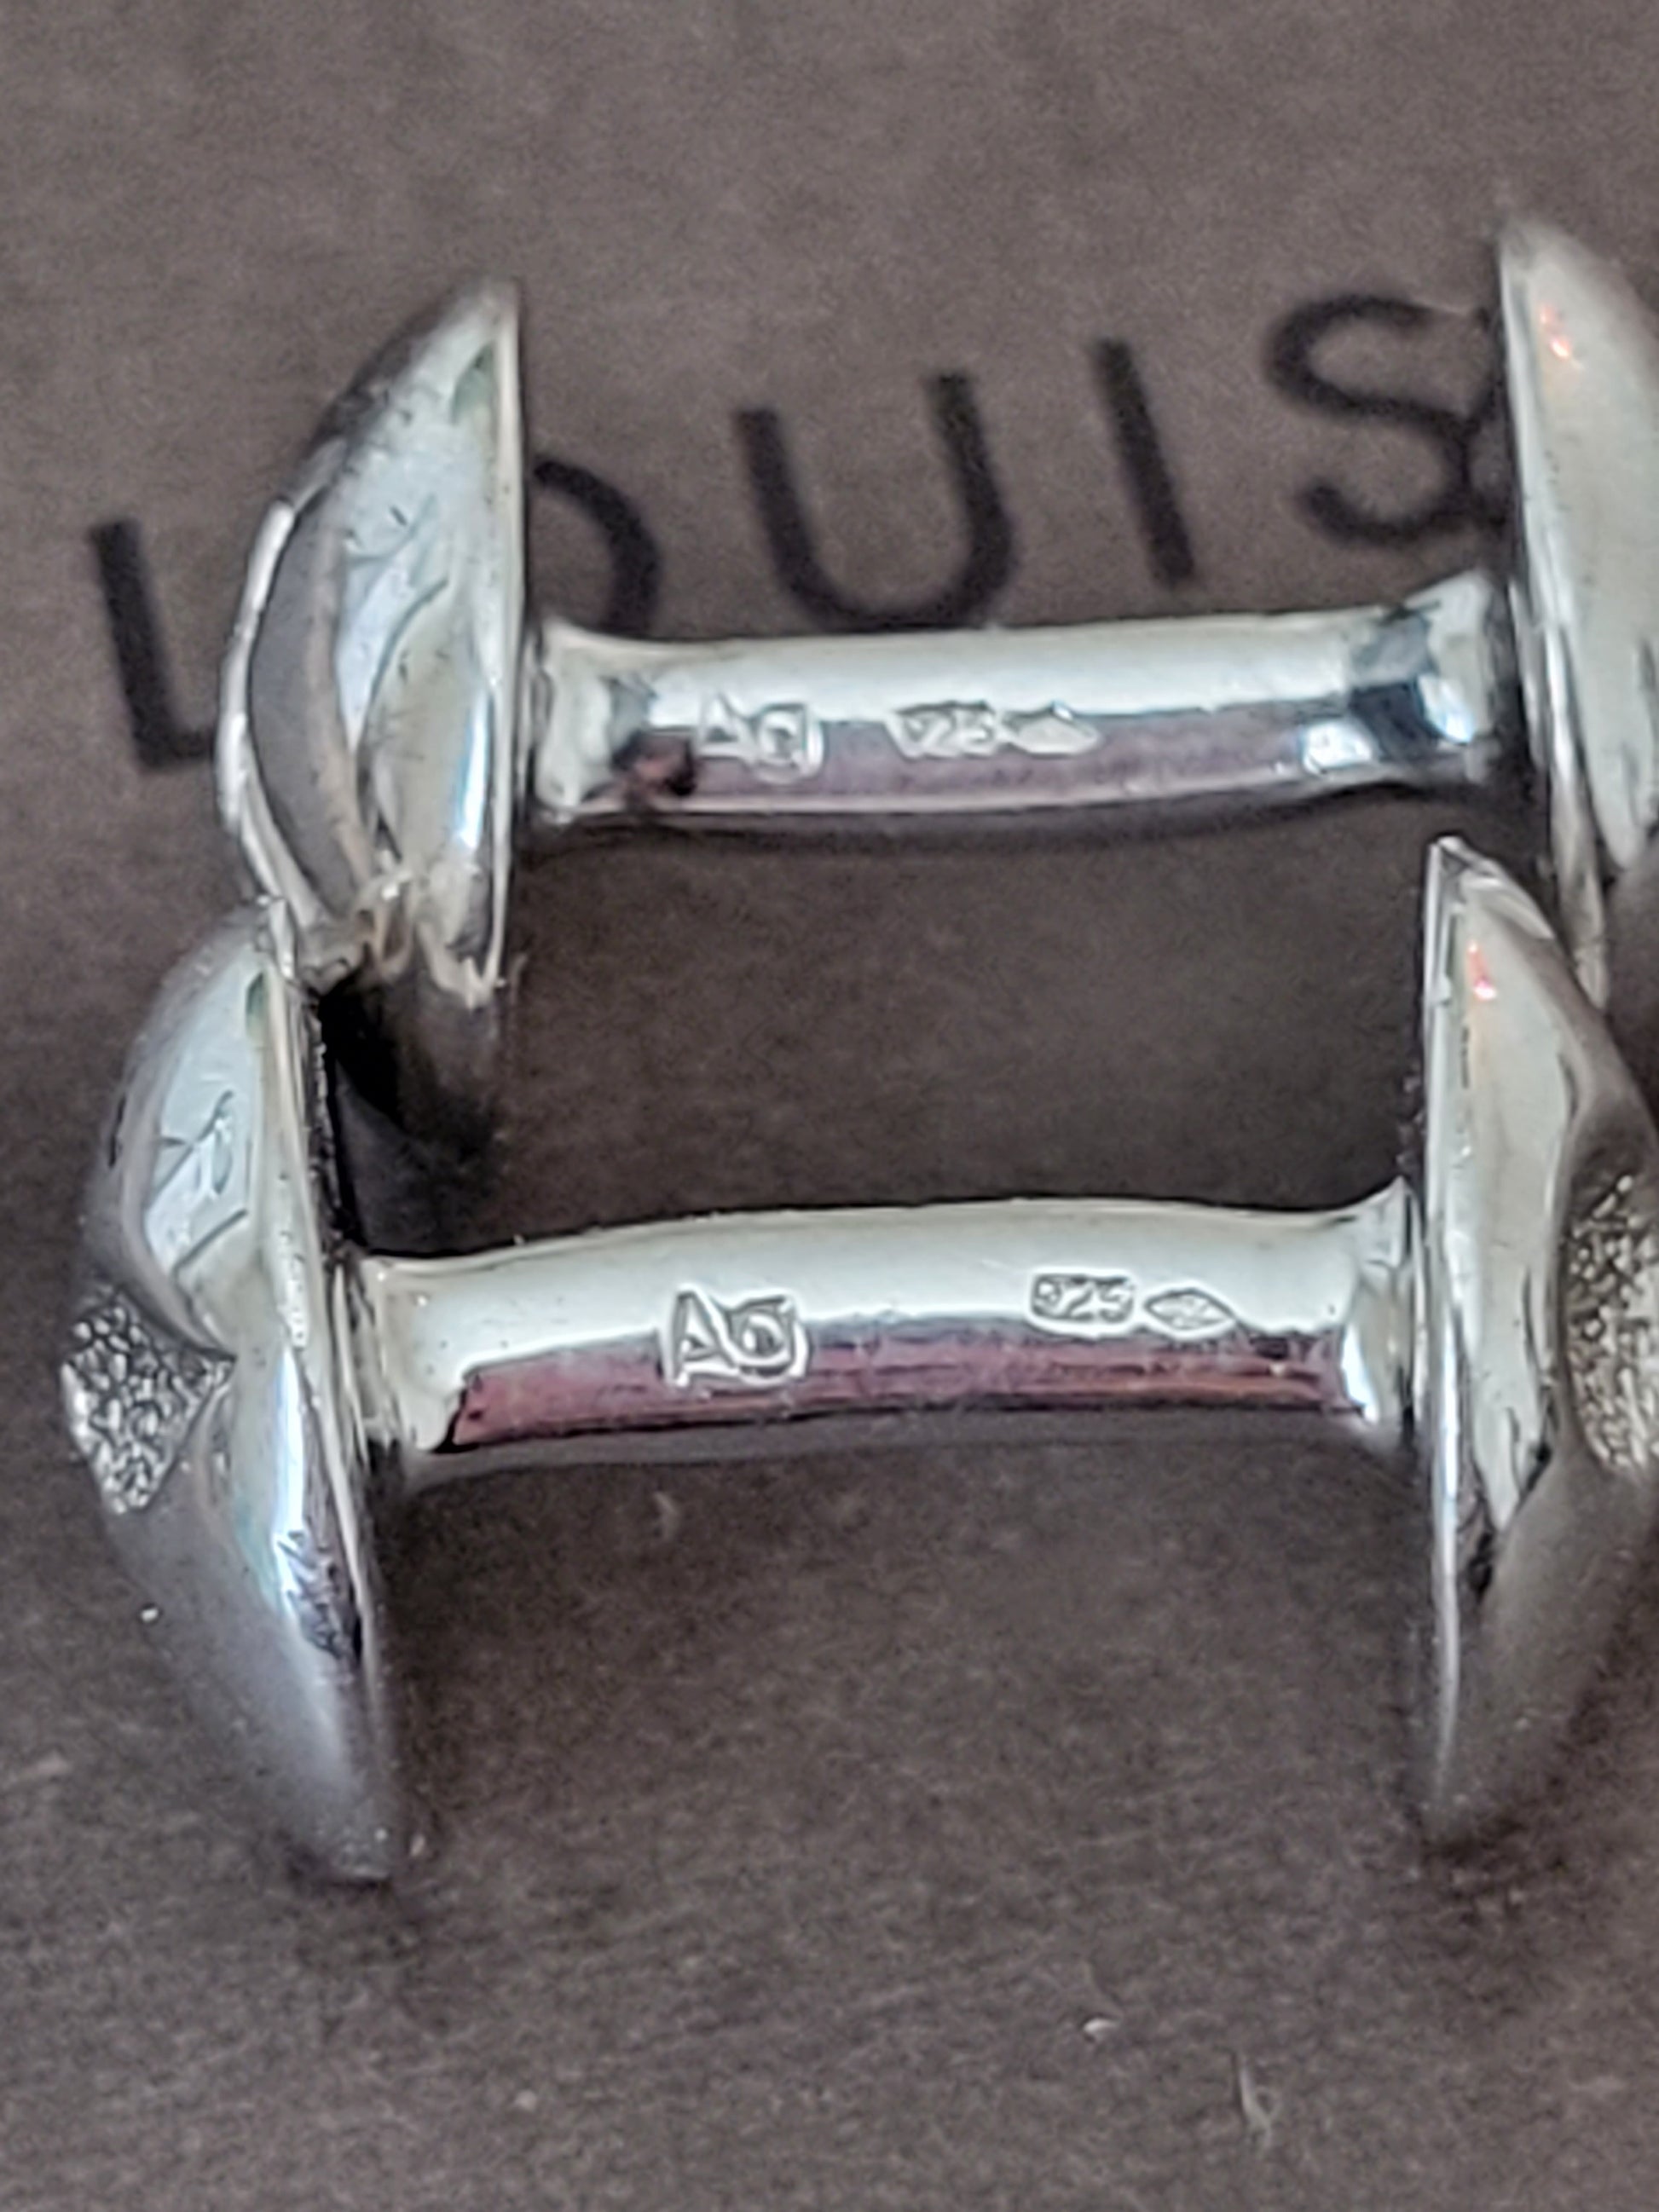 Louis Vuitton Lv Catch Cufflinks (BOUTONS DE MANCHETTE LV CATCH, M80188)